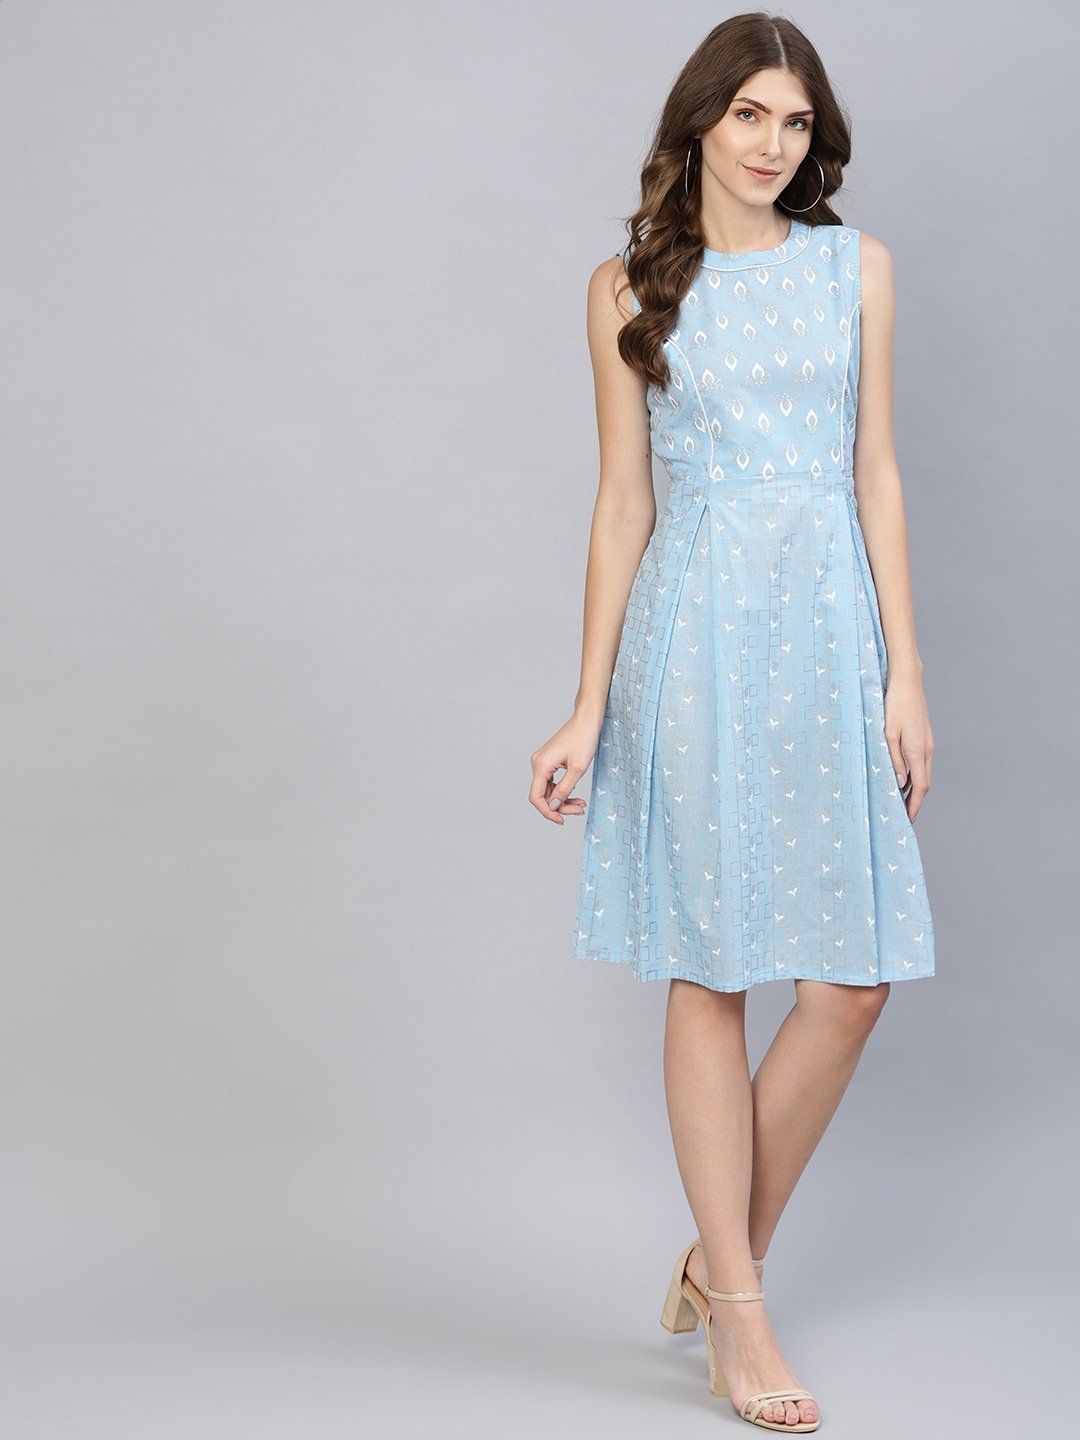 Women's  Blue & White Khari Print A-Line Dress - AKS